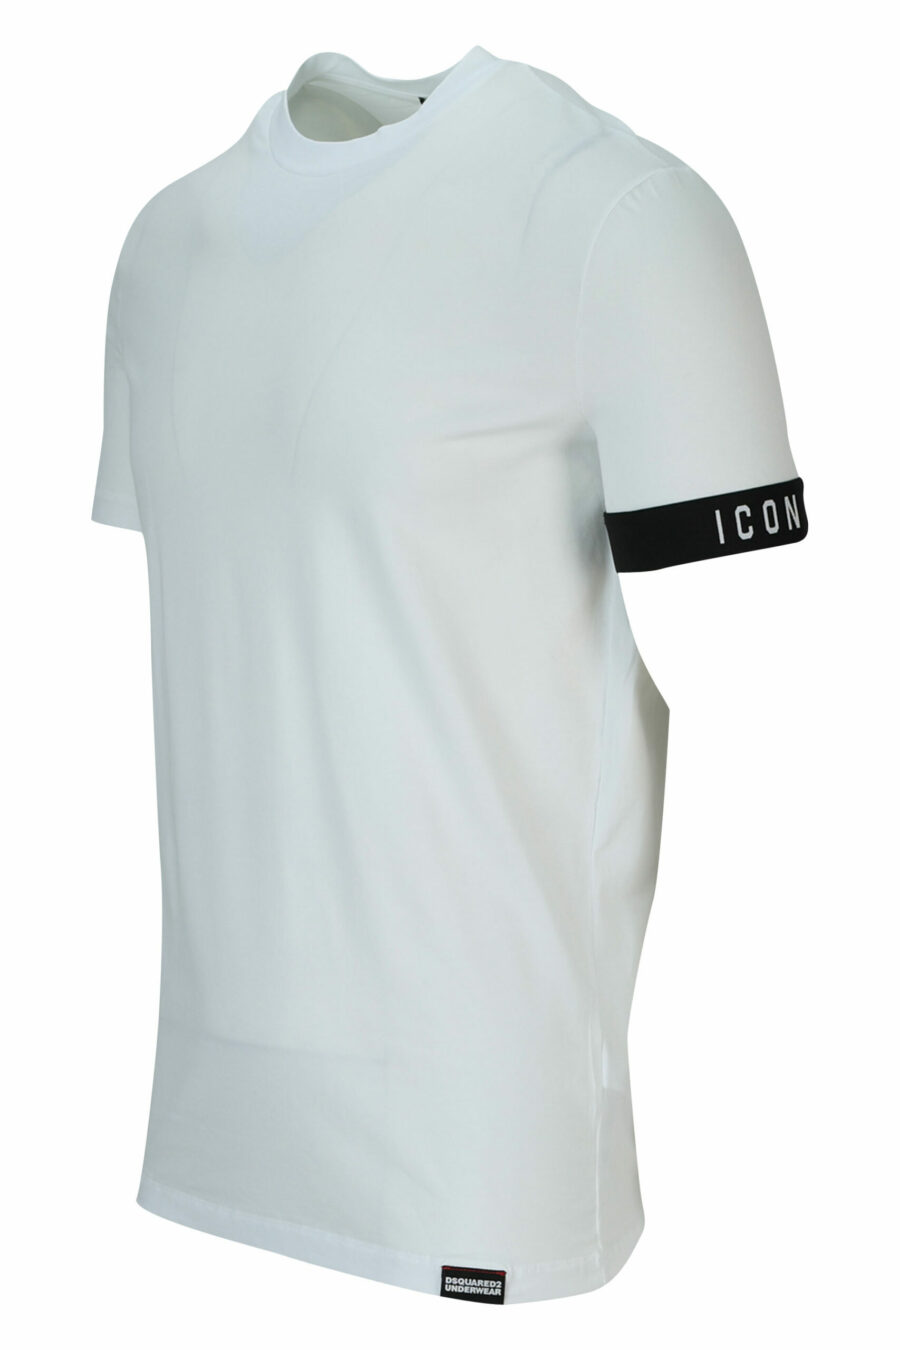 White T-shirt with black logo - 8032674767493 1 scaled